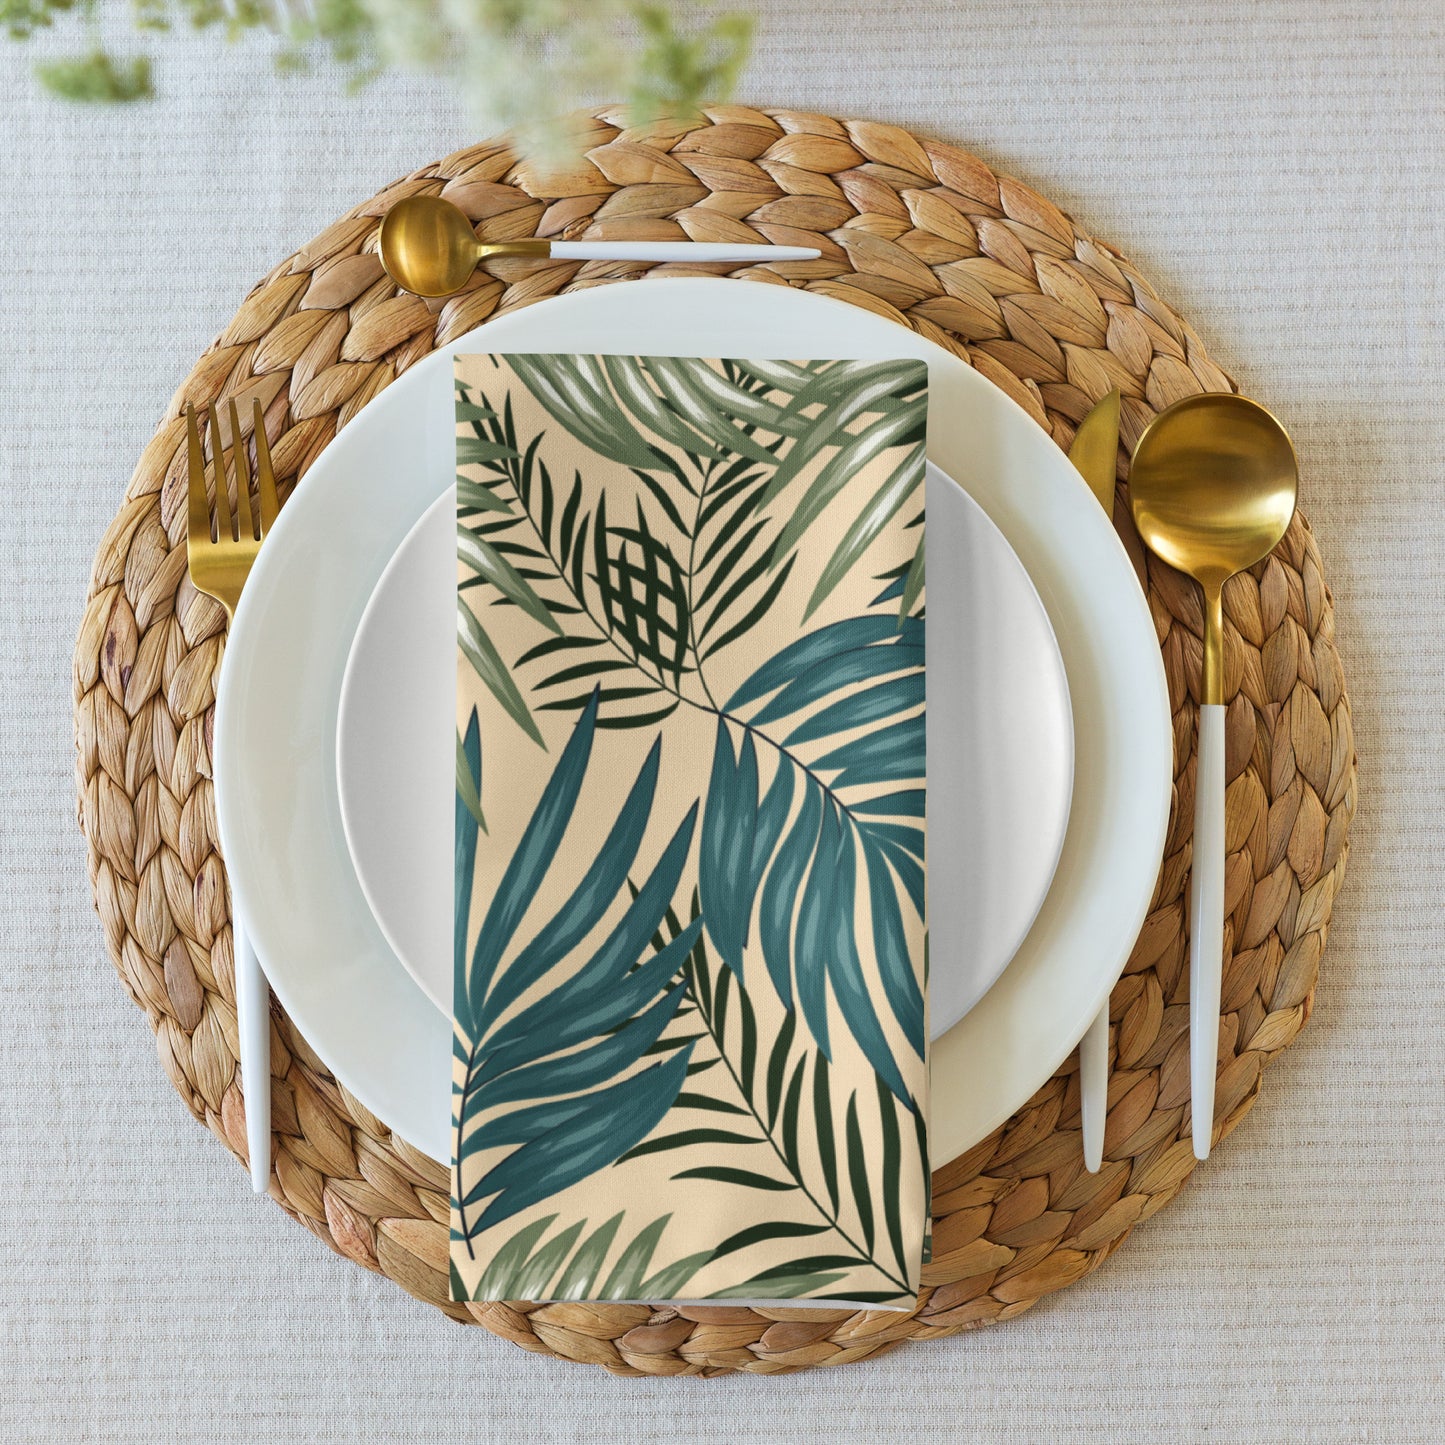 Tropical Palm Leaves Cloth Napkins - Set of 4